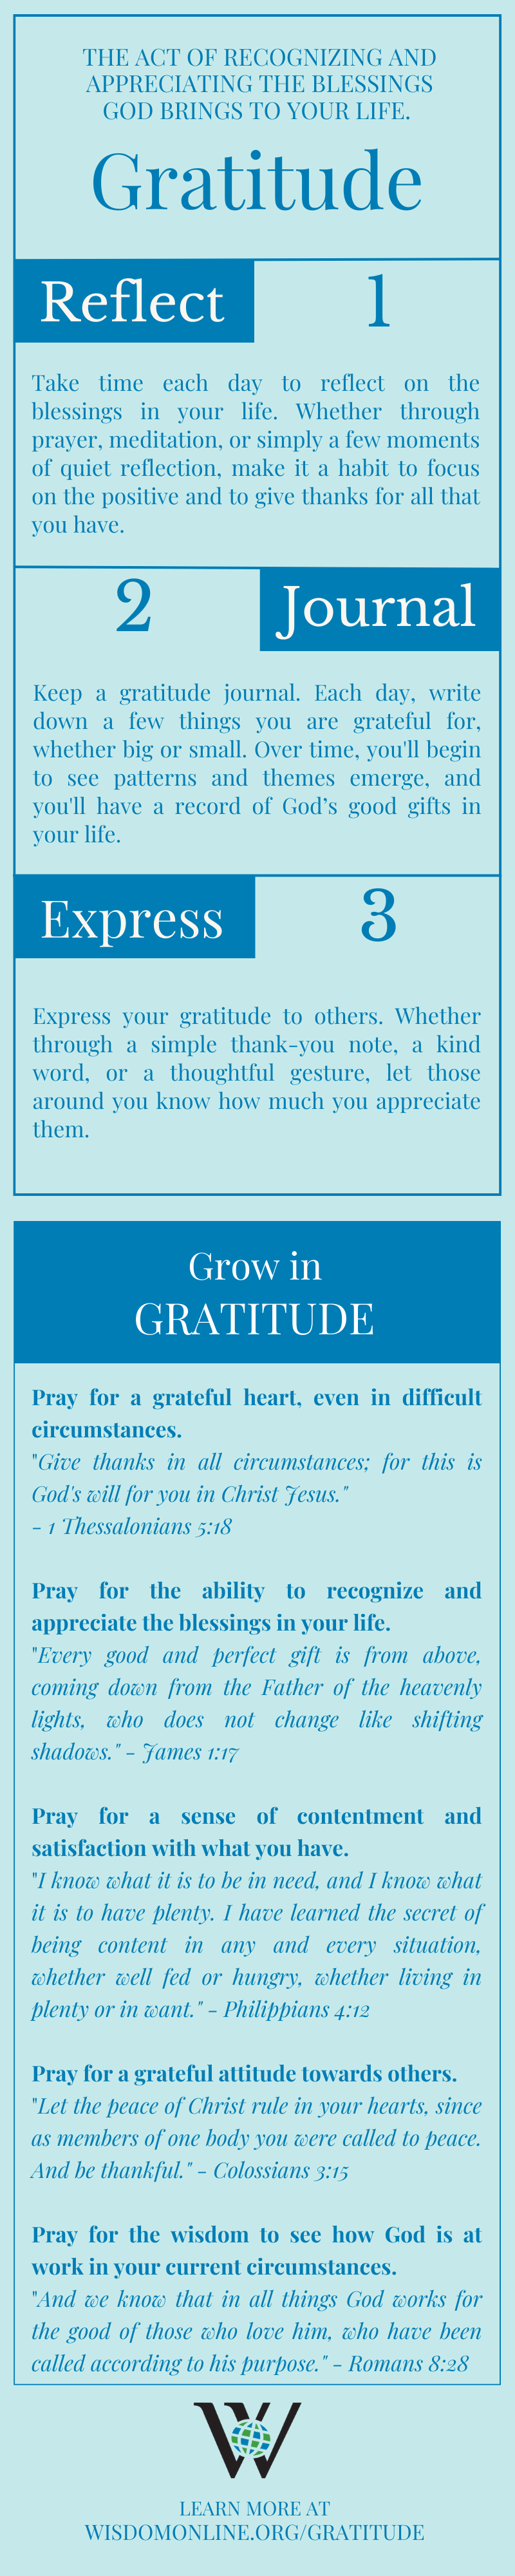 Infographic on Biblical Gratitude